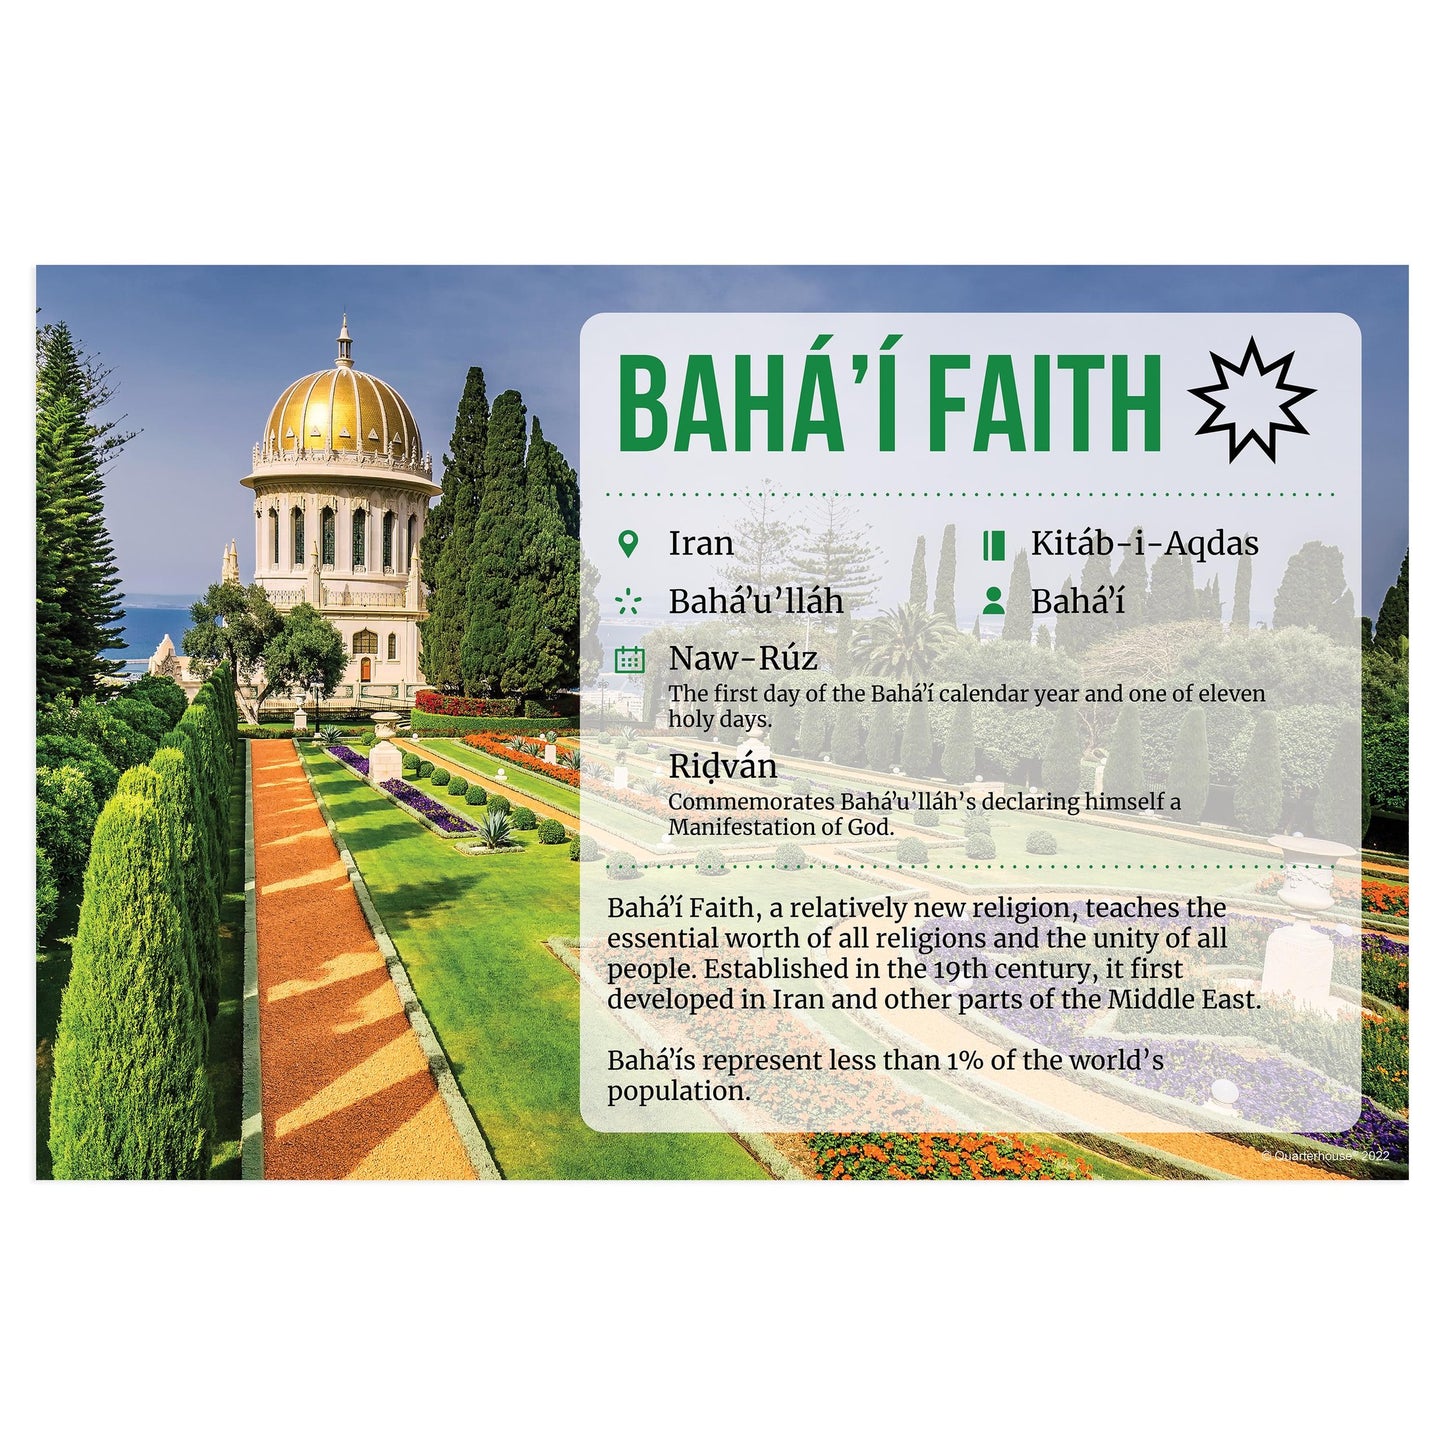 Quarterhouse Facts about Baháʼí Poster, Social Studies Classroom Materials for Teachers